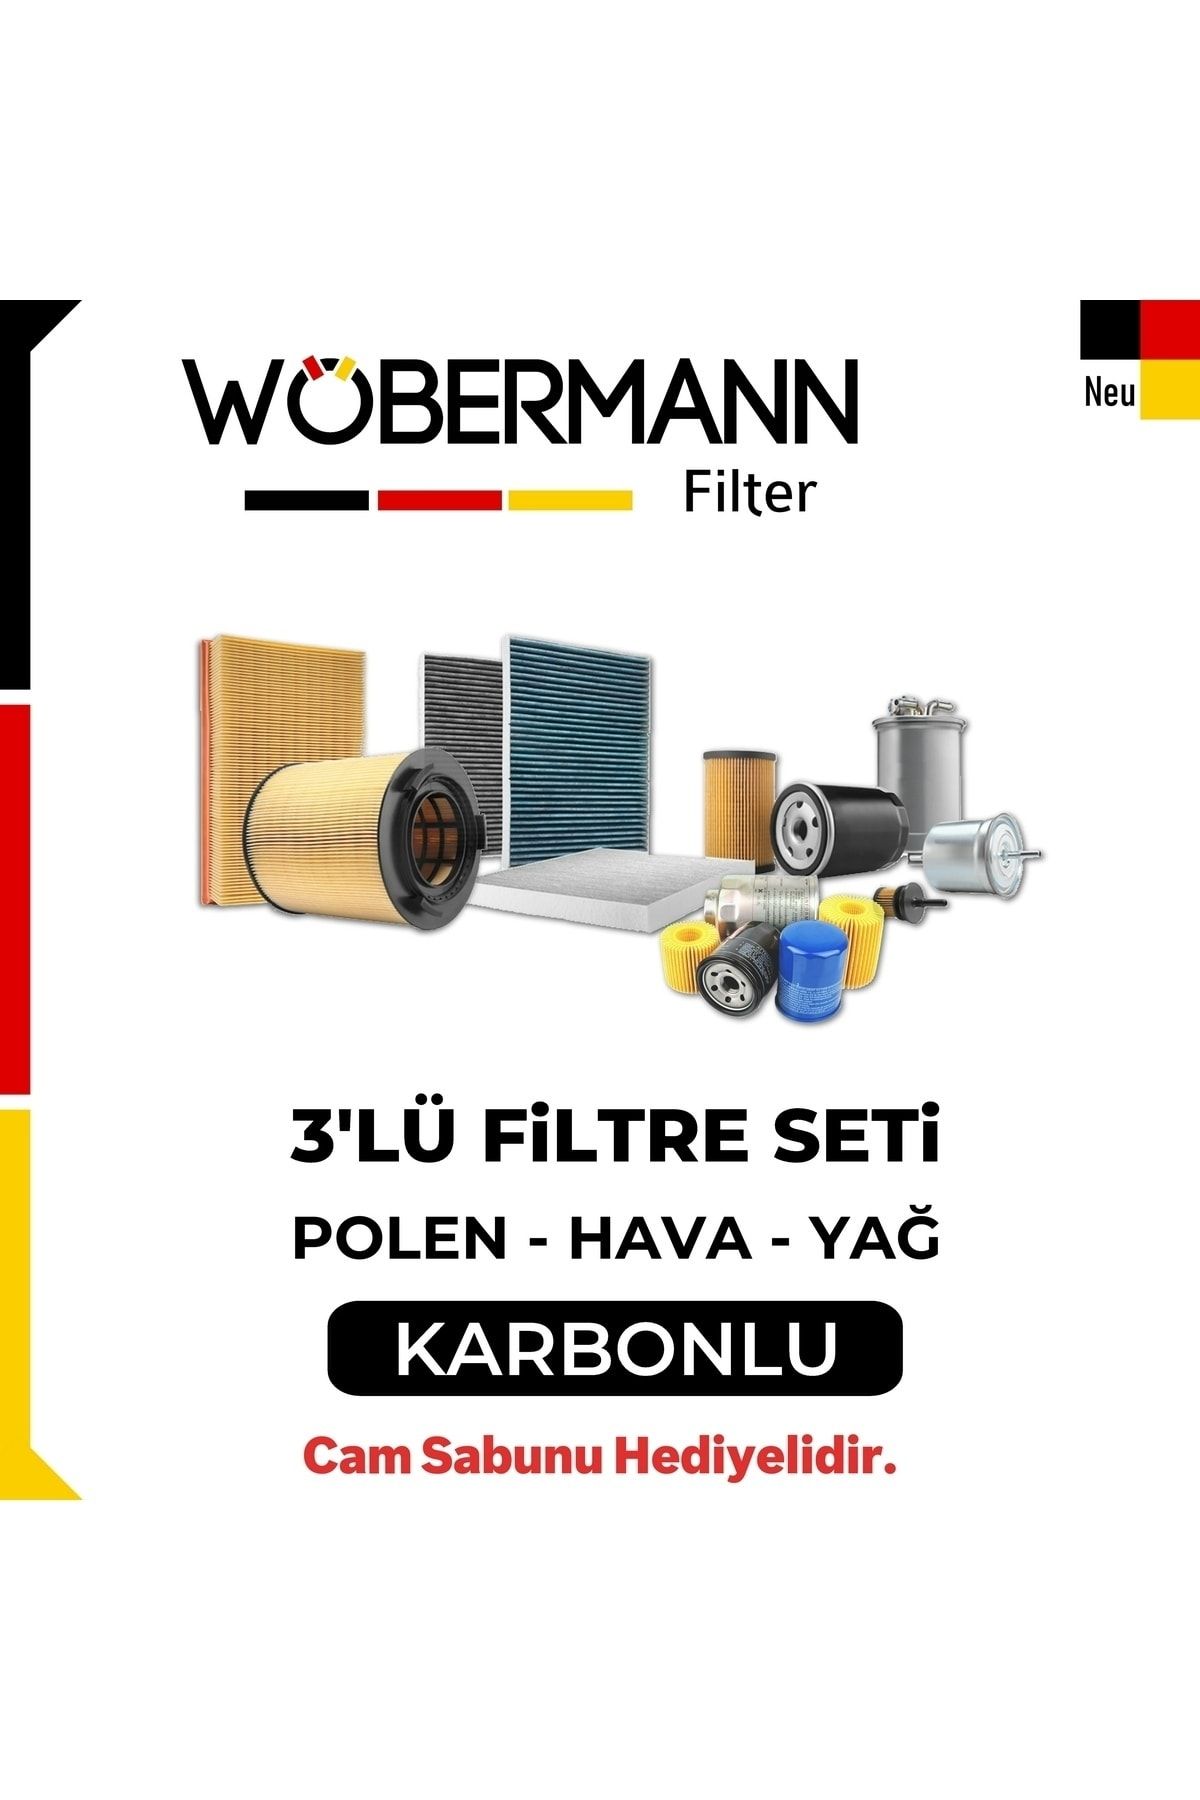 Wöbermann Vw Passat 2.0 Tdı Filtre Bakım Seti 2011-2014 3lü Karbonlu